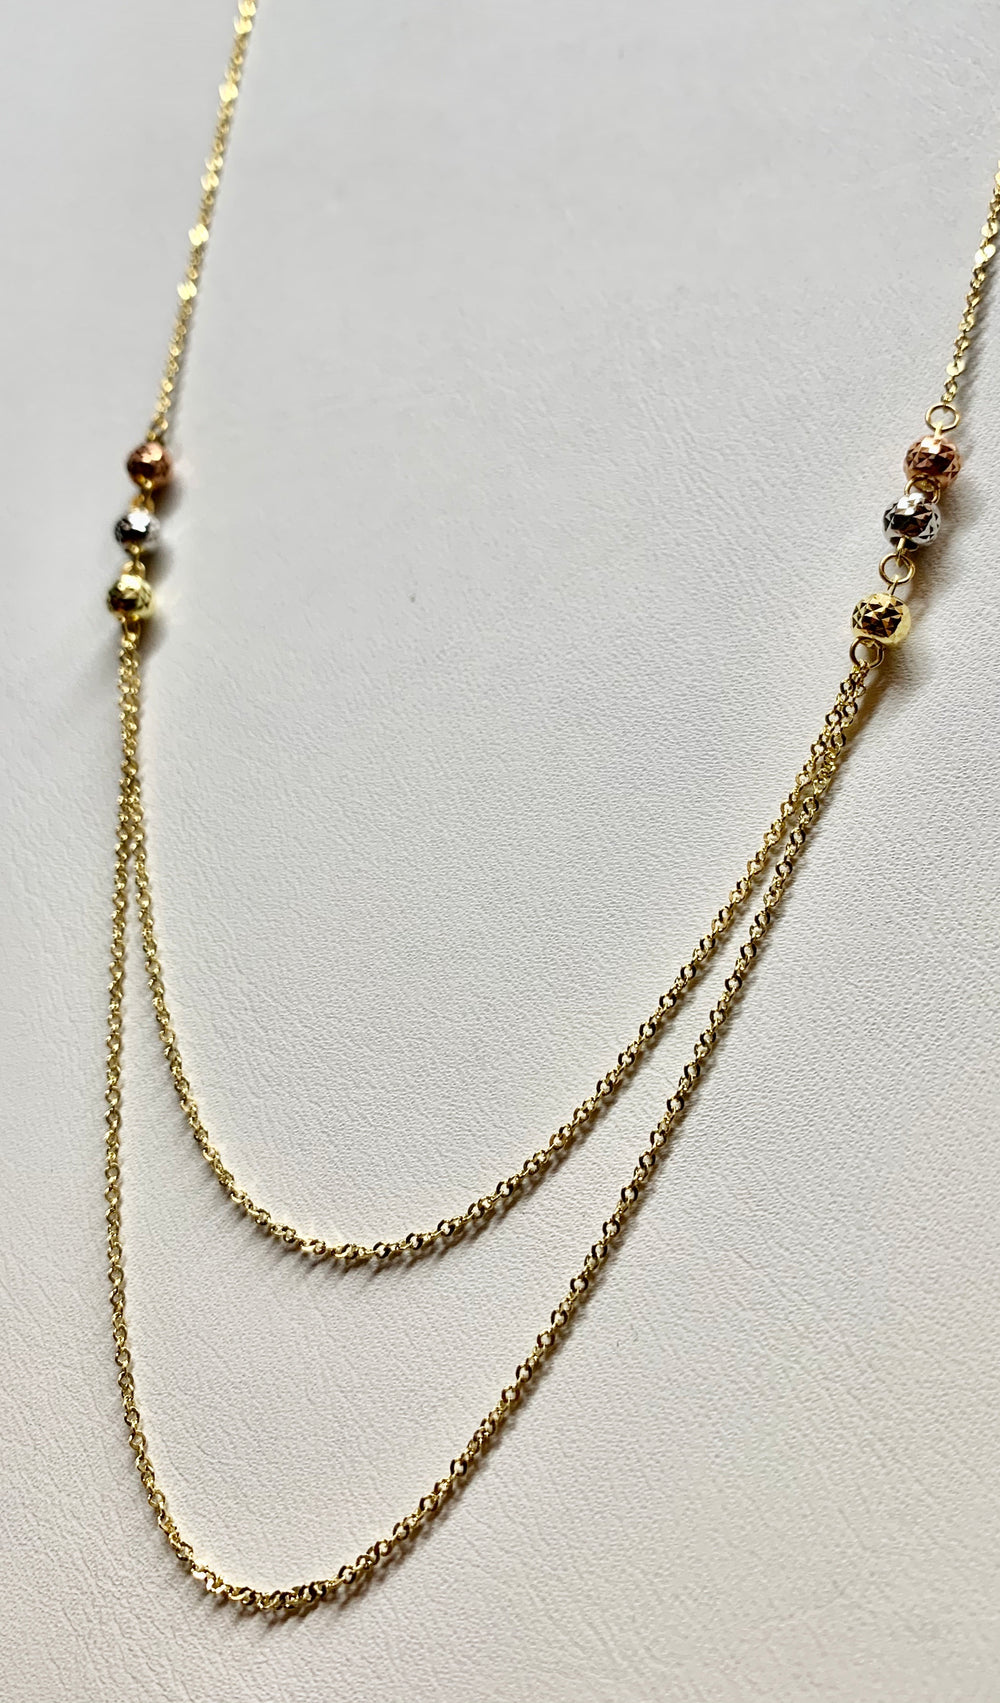 14K Yellow/Rose/White Designer Necklace